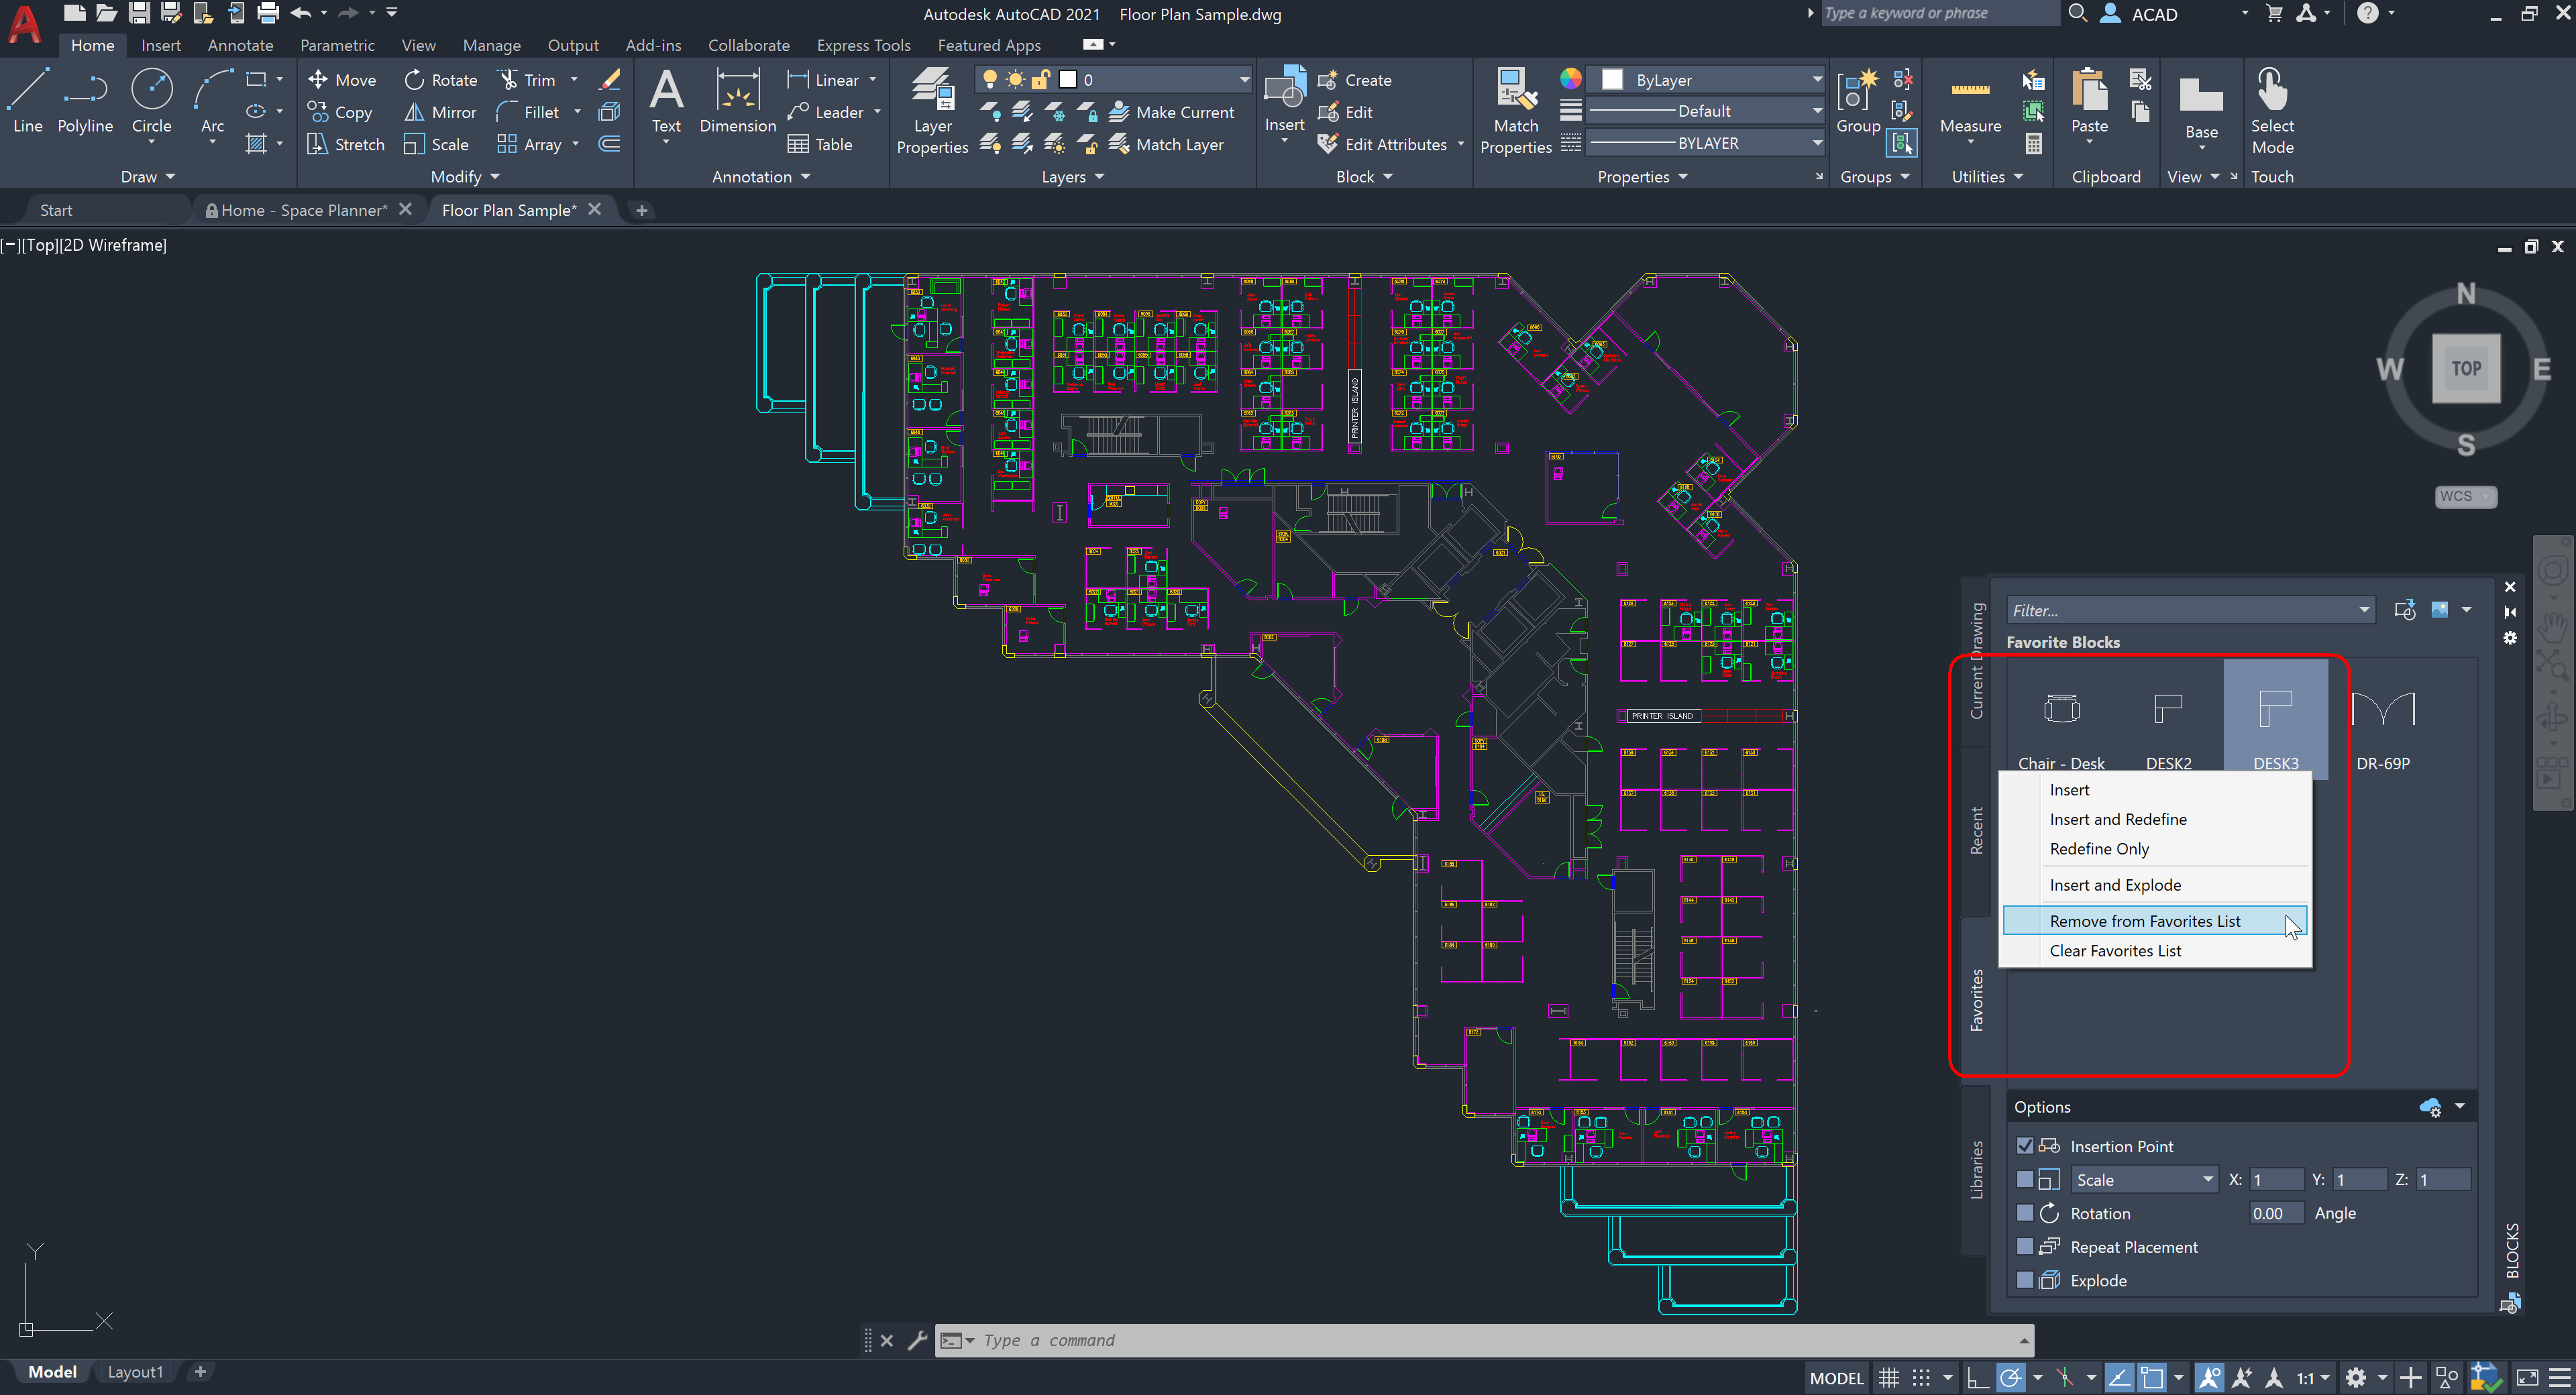 autodesk design review 2021 download